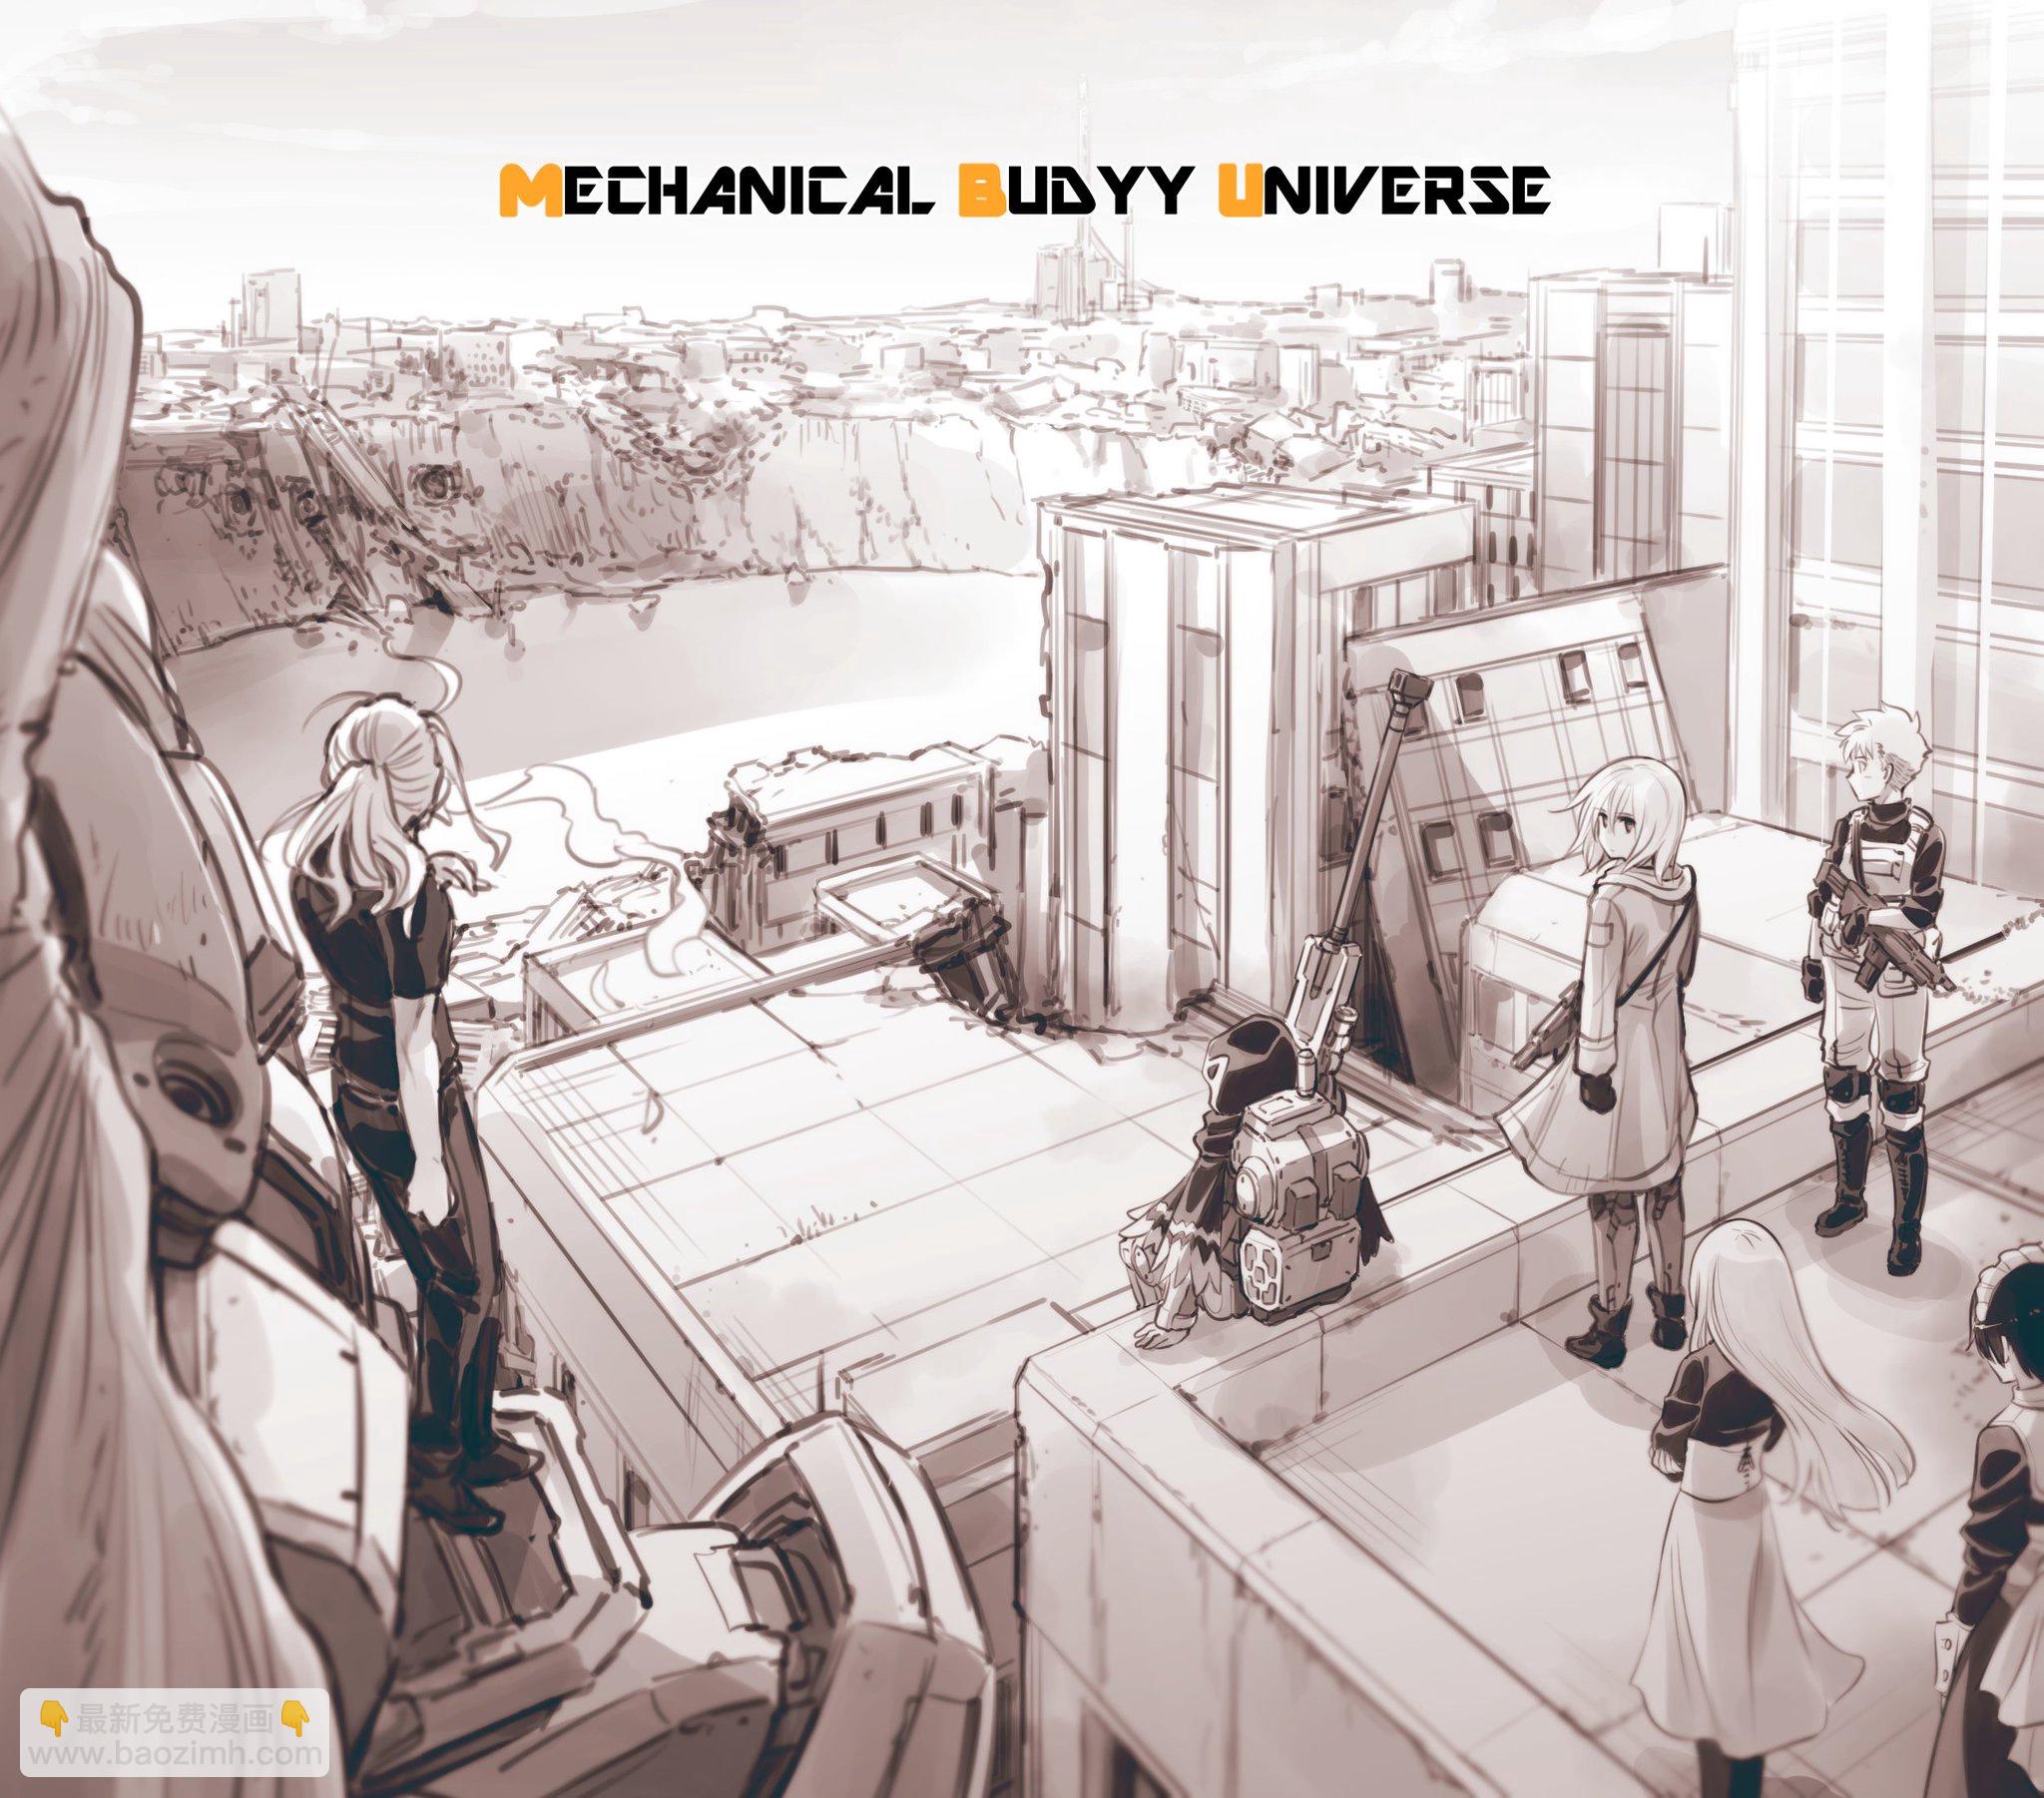 Mechanical Buddy Universe - 書籍發售宣傳 - 2